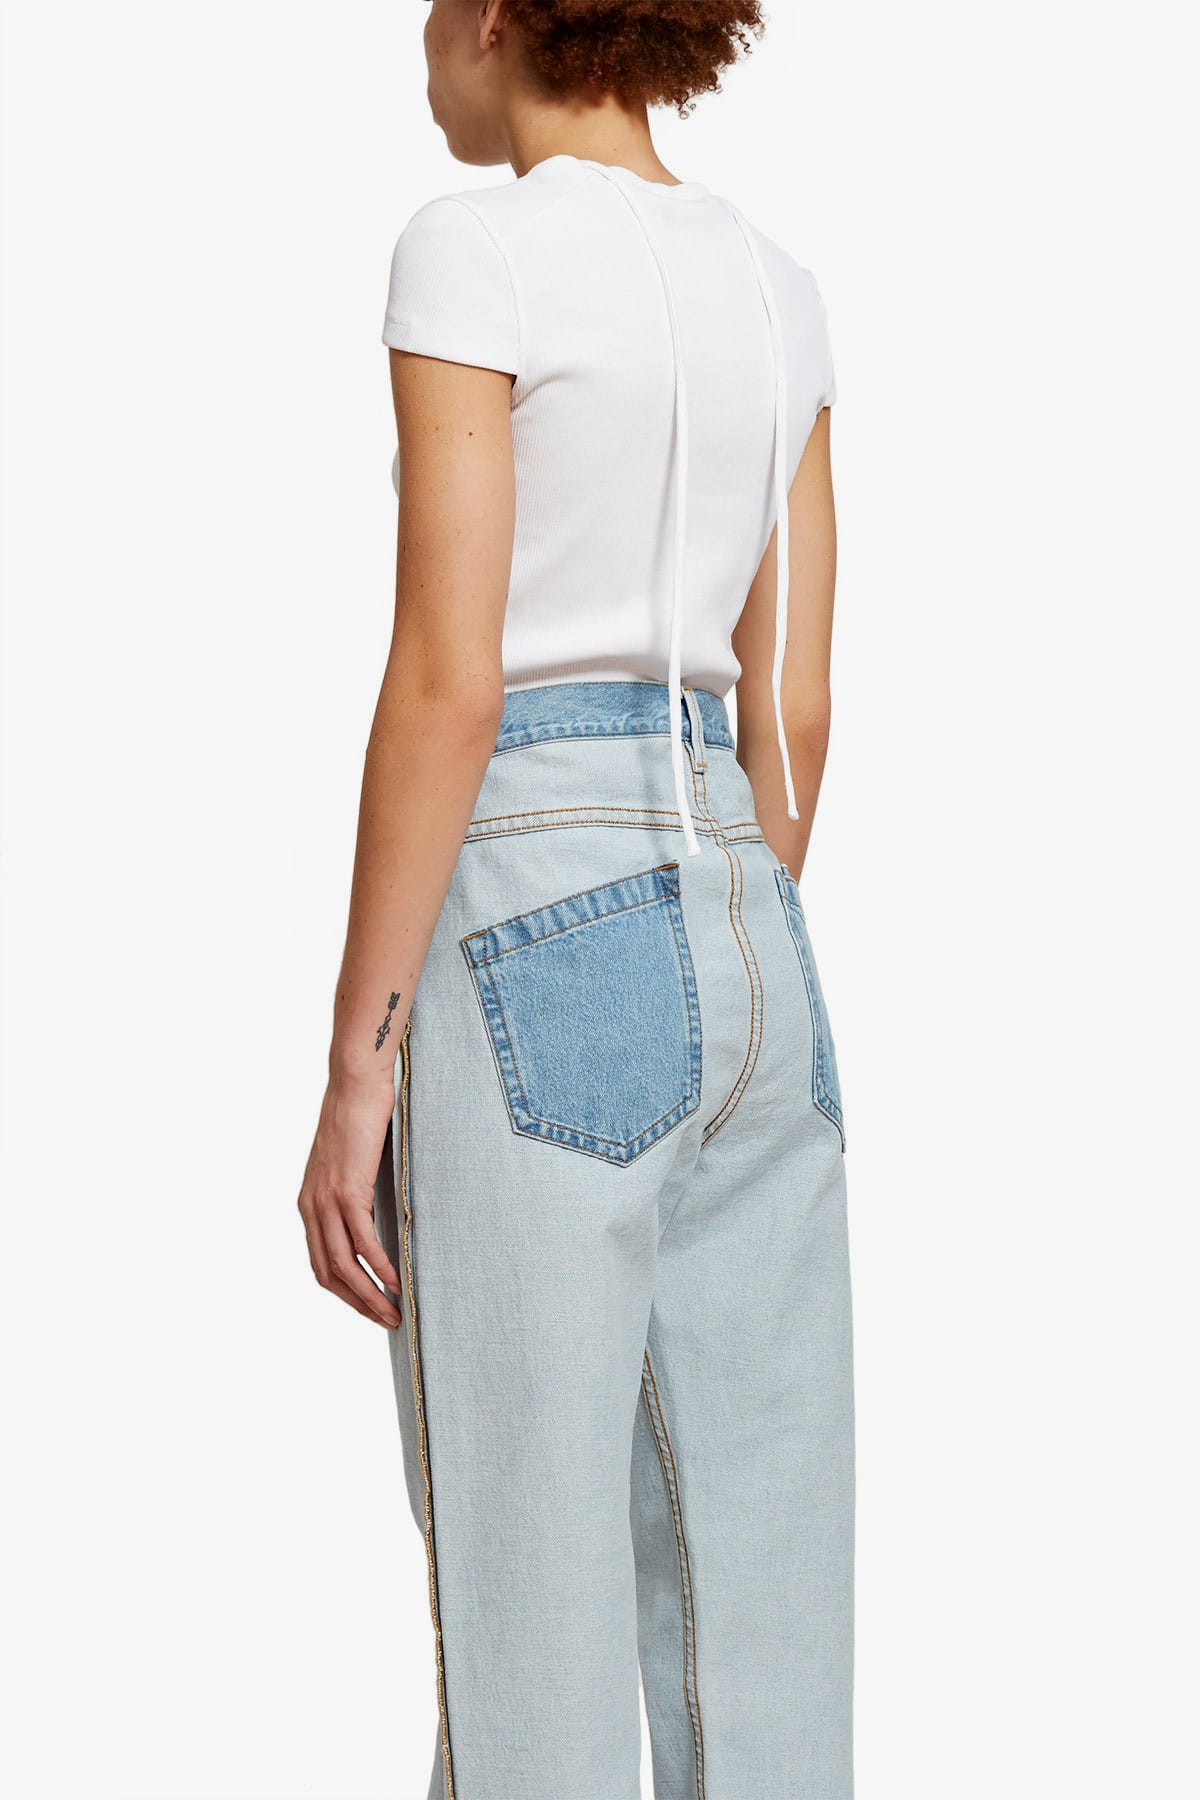 helmut lang inside out jeans